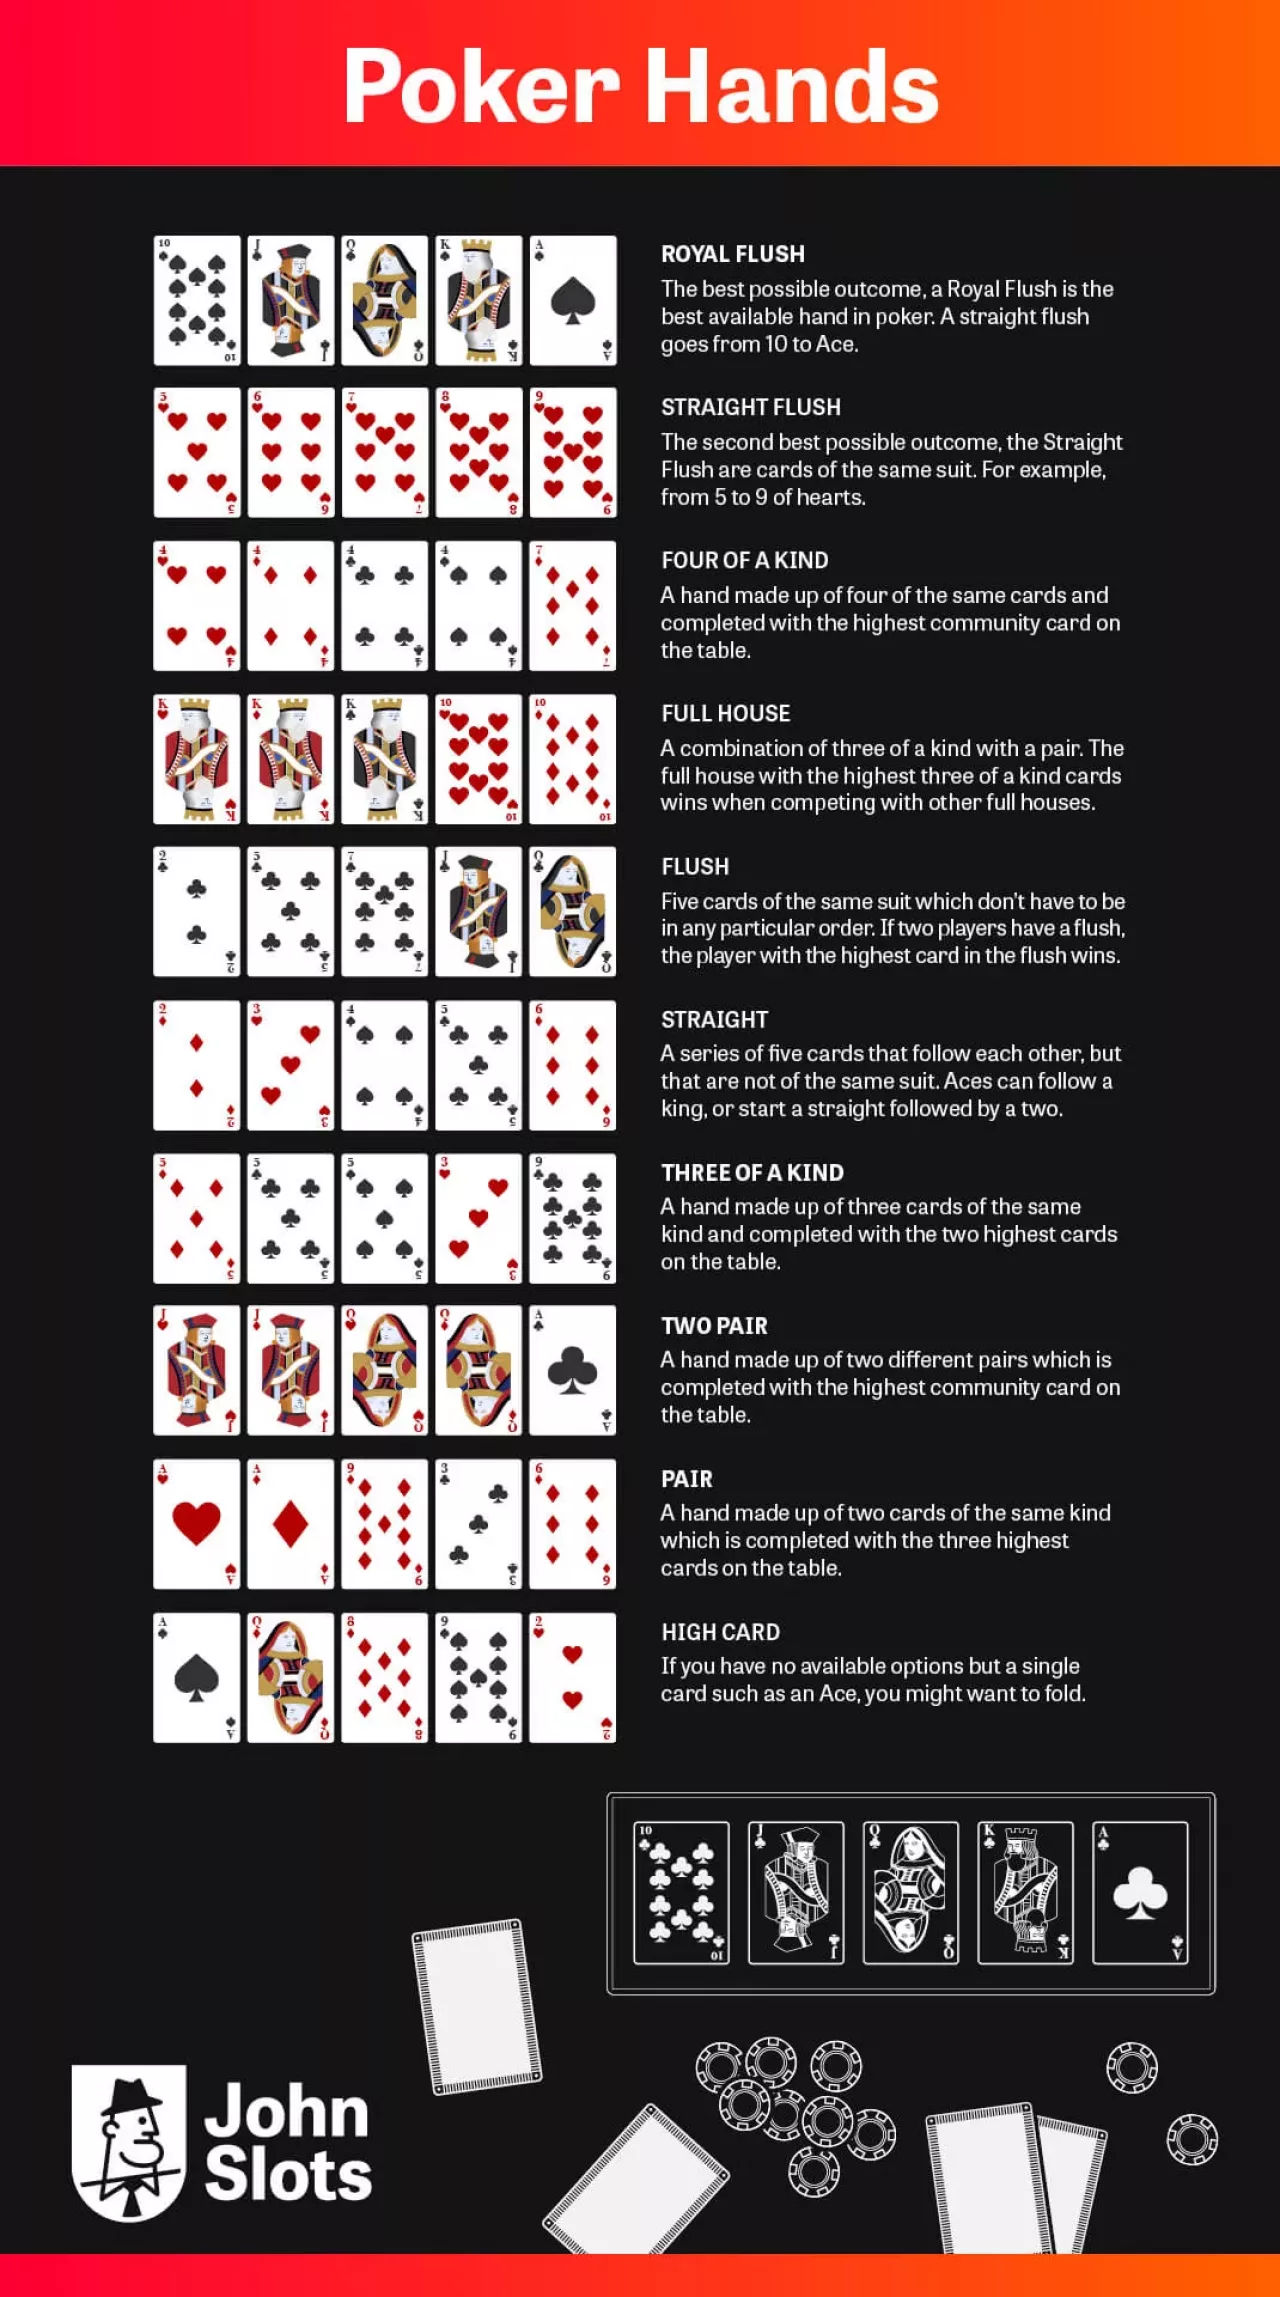 Poker rules guide - Poker Hands cheat sheet